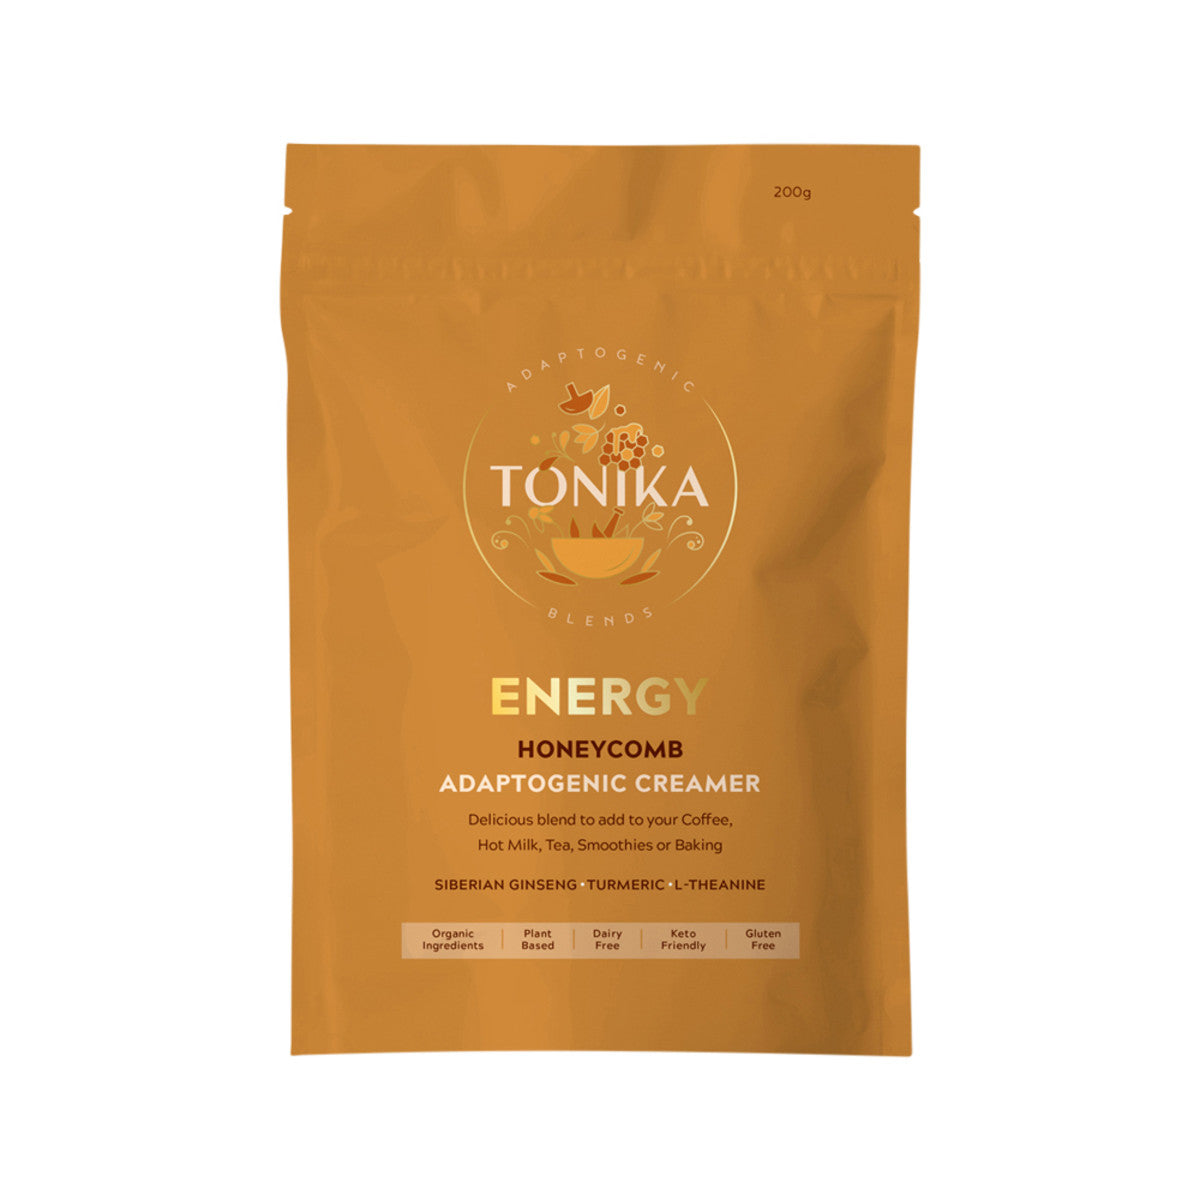 Tonika Adaptogenic Creamer Energy (Honeycomb) 200g